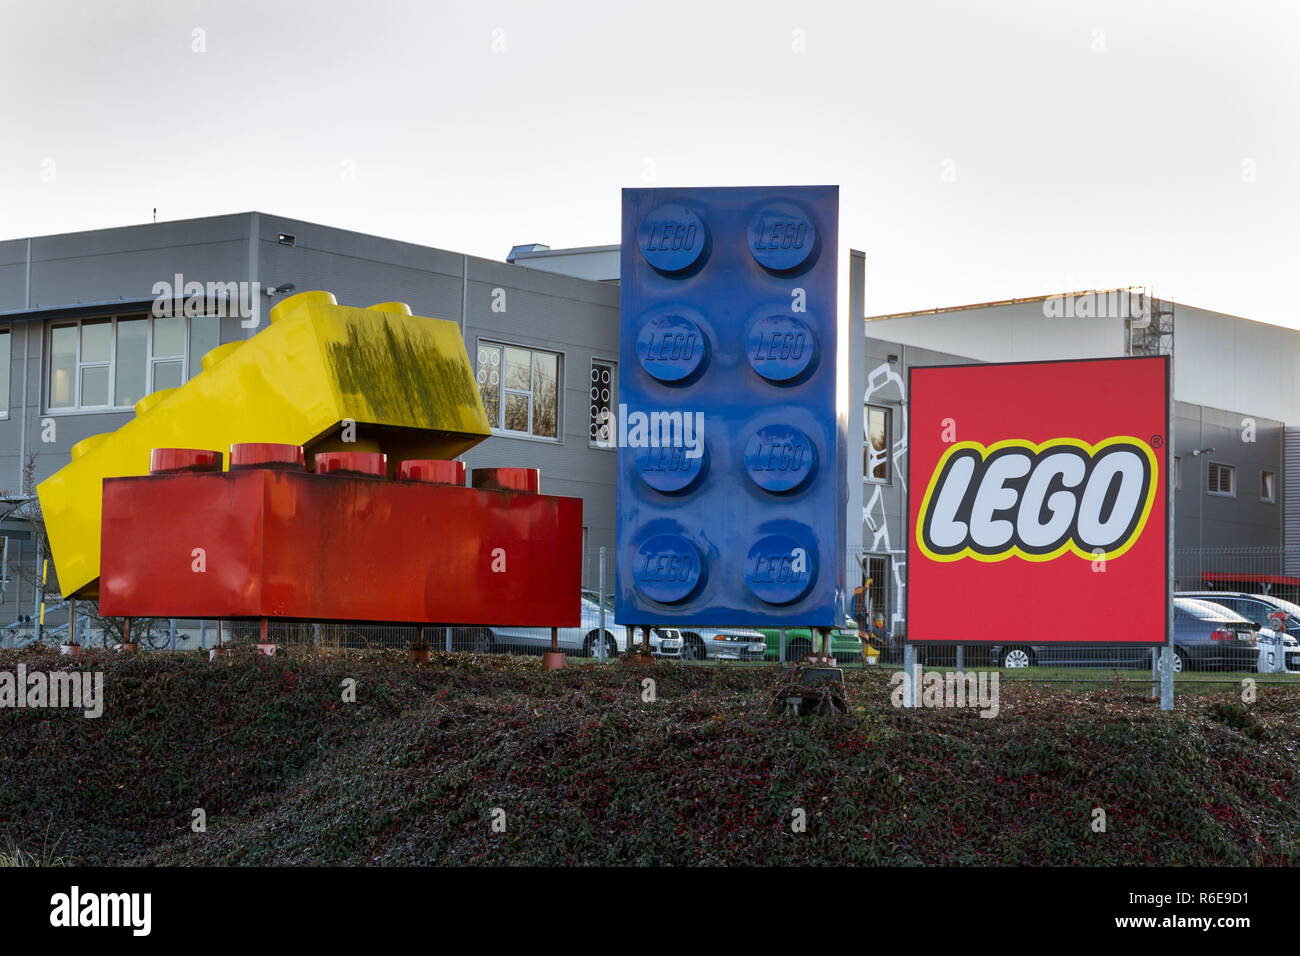 KLADNO, CZECH REPUBLIC - DECEMBER 4 2018: Giant Lego bricks in front of the Lego Group company logo production plant on December 4, 2018 in Kladno, Cz Stock Photo